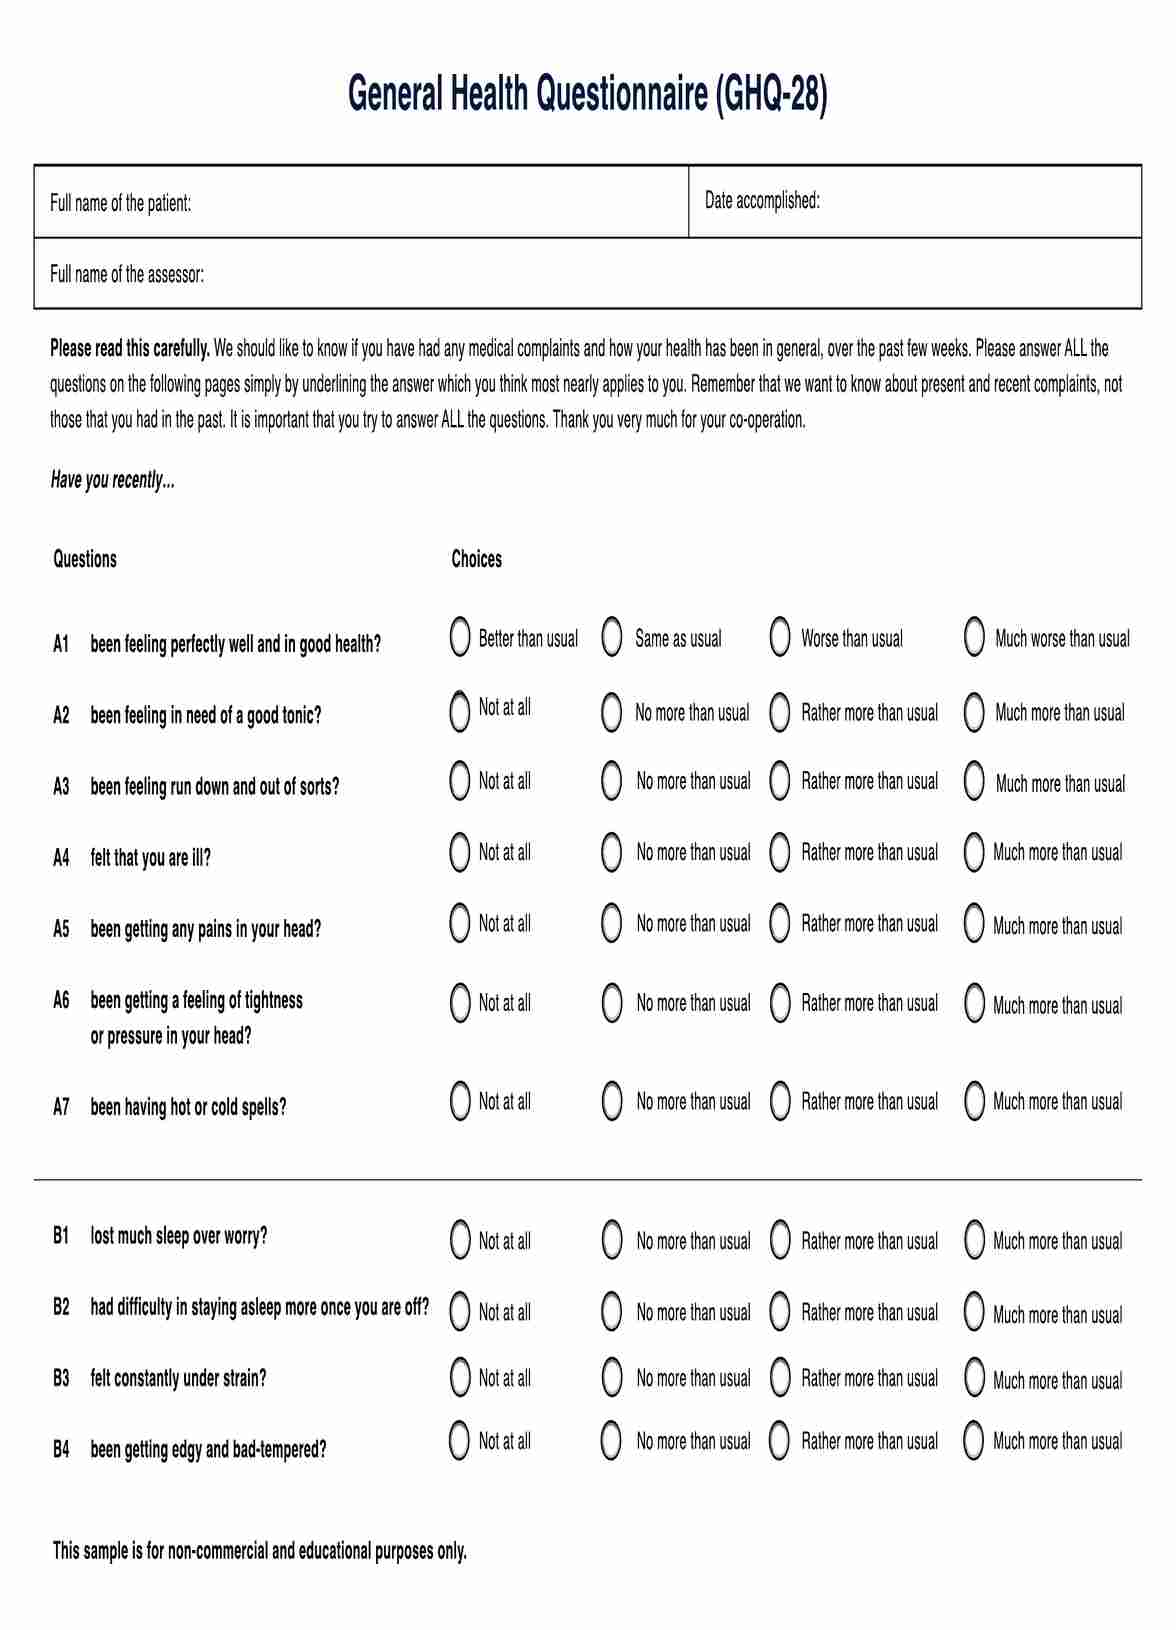 General Health Questionnaire (GHQ-28) PDF Example